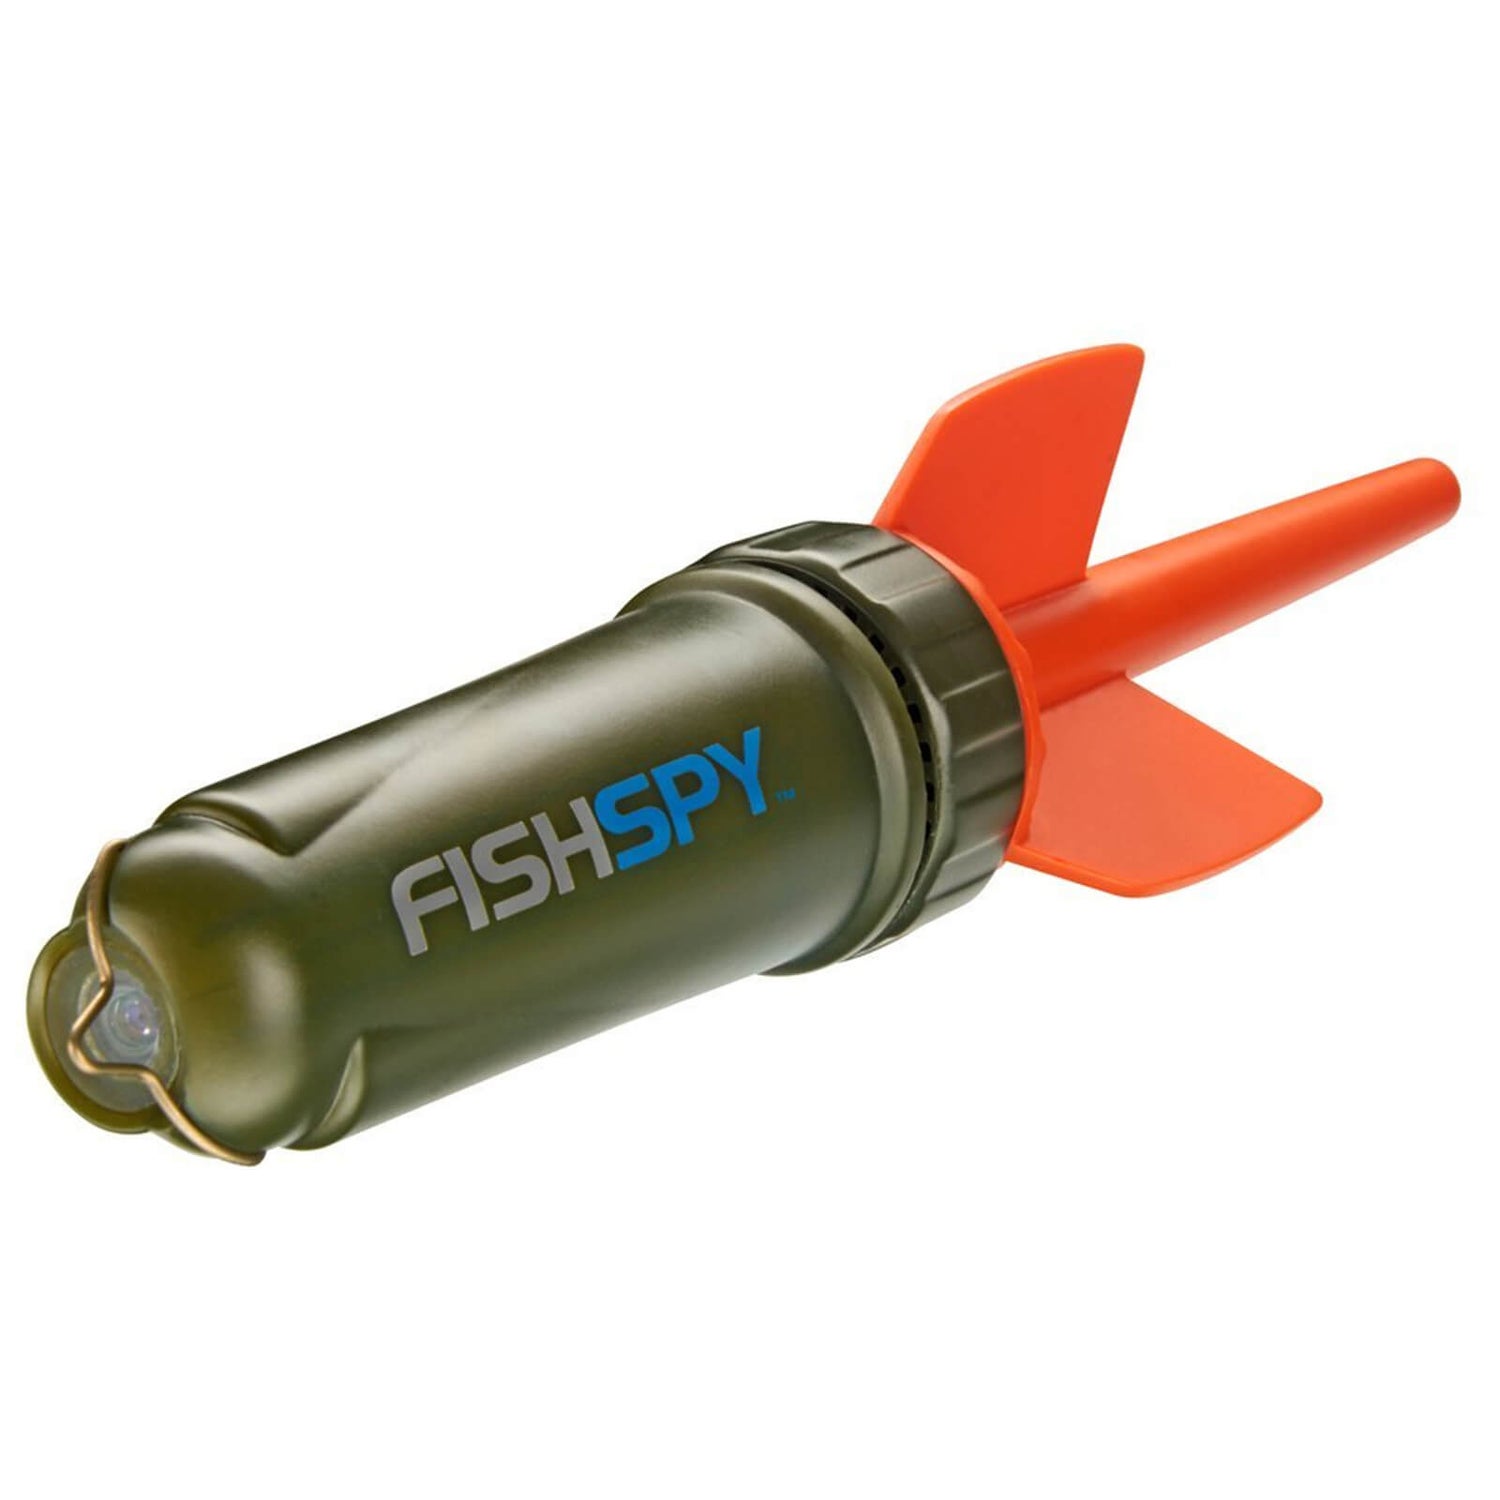 FishSpy Marker Float Underwater Fishing Camera Stream Live Video